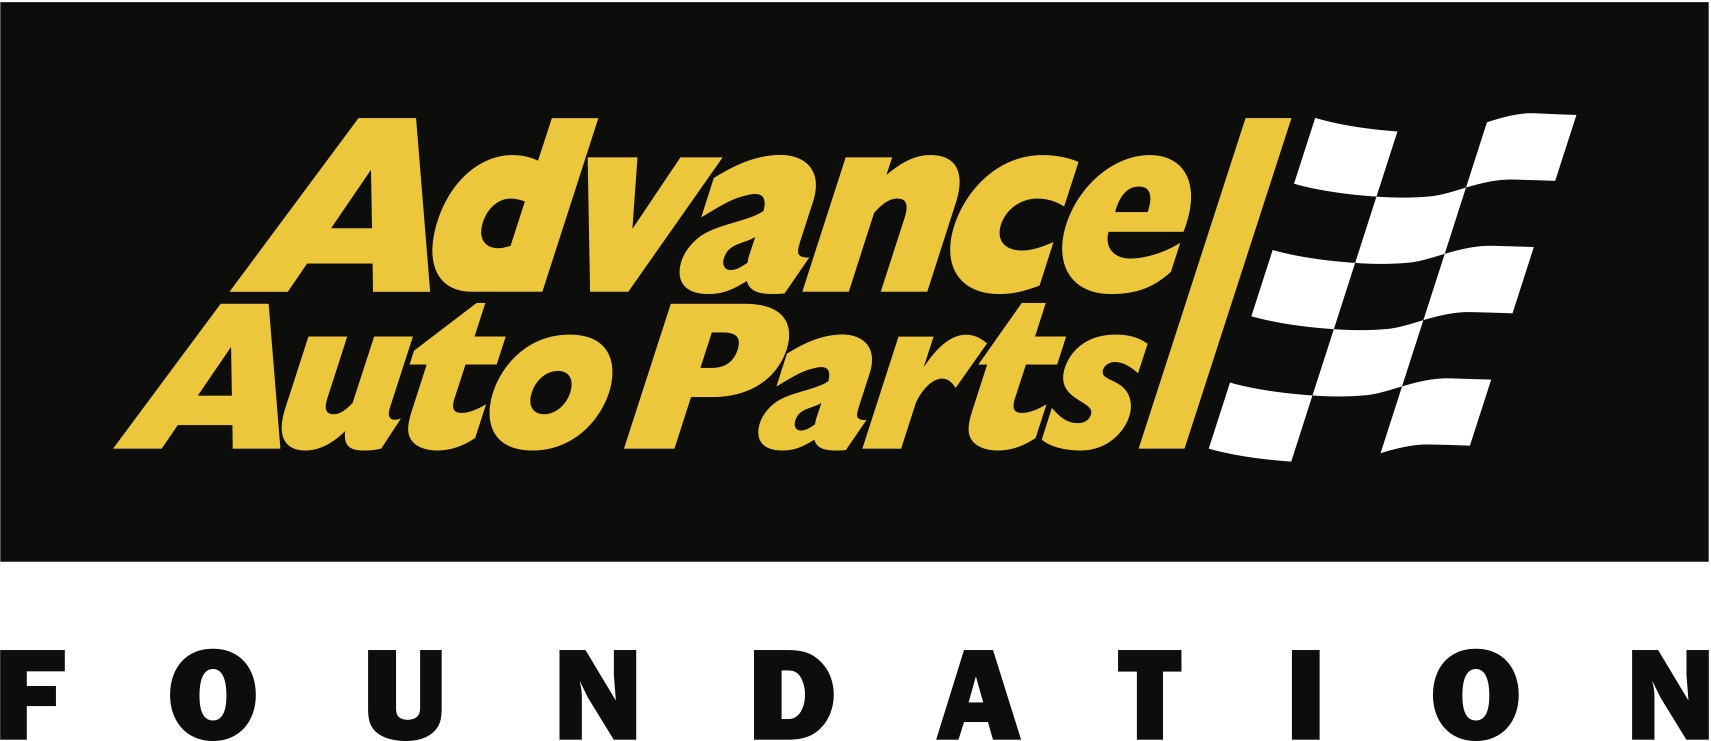 Sponsor Advanced Auto Parts Foundation